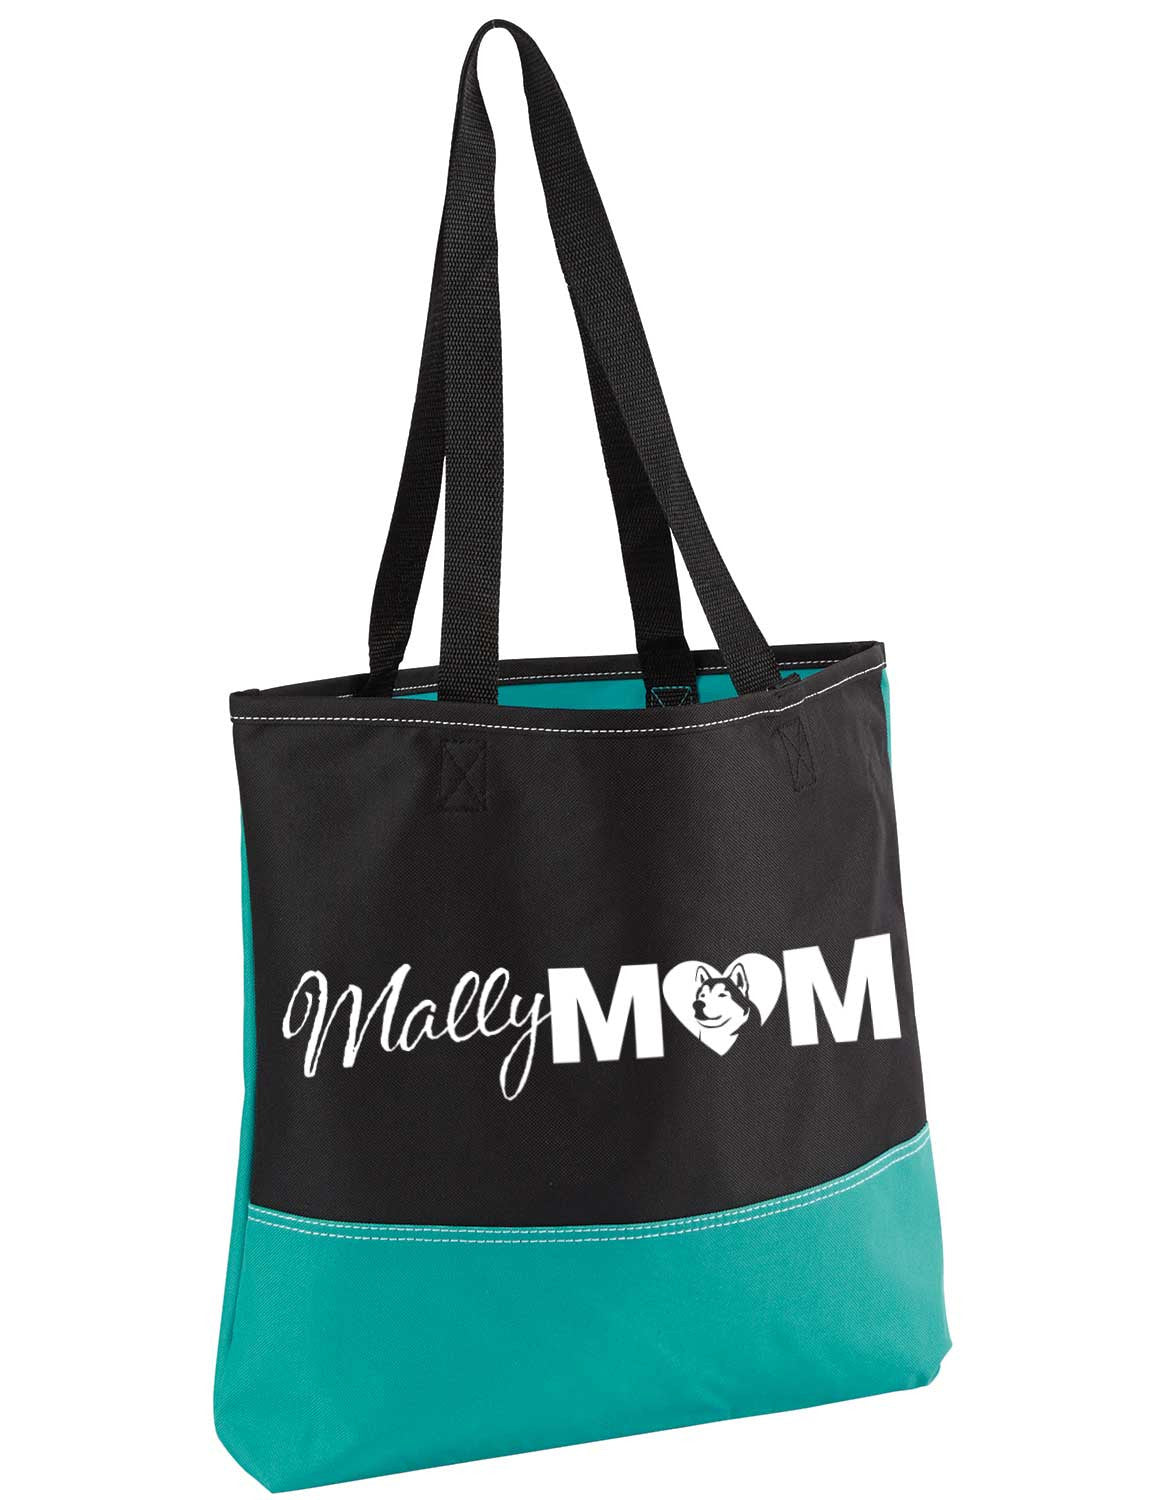 Mally Mom Tote, Bag - Alaskan Malamute - Super Fun & Cute